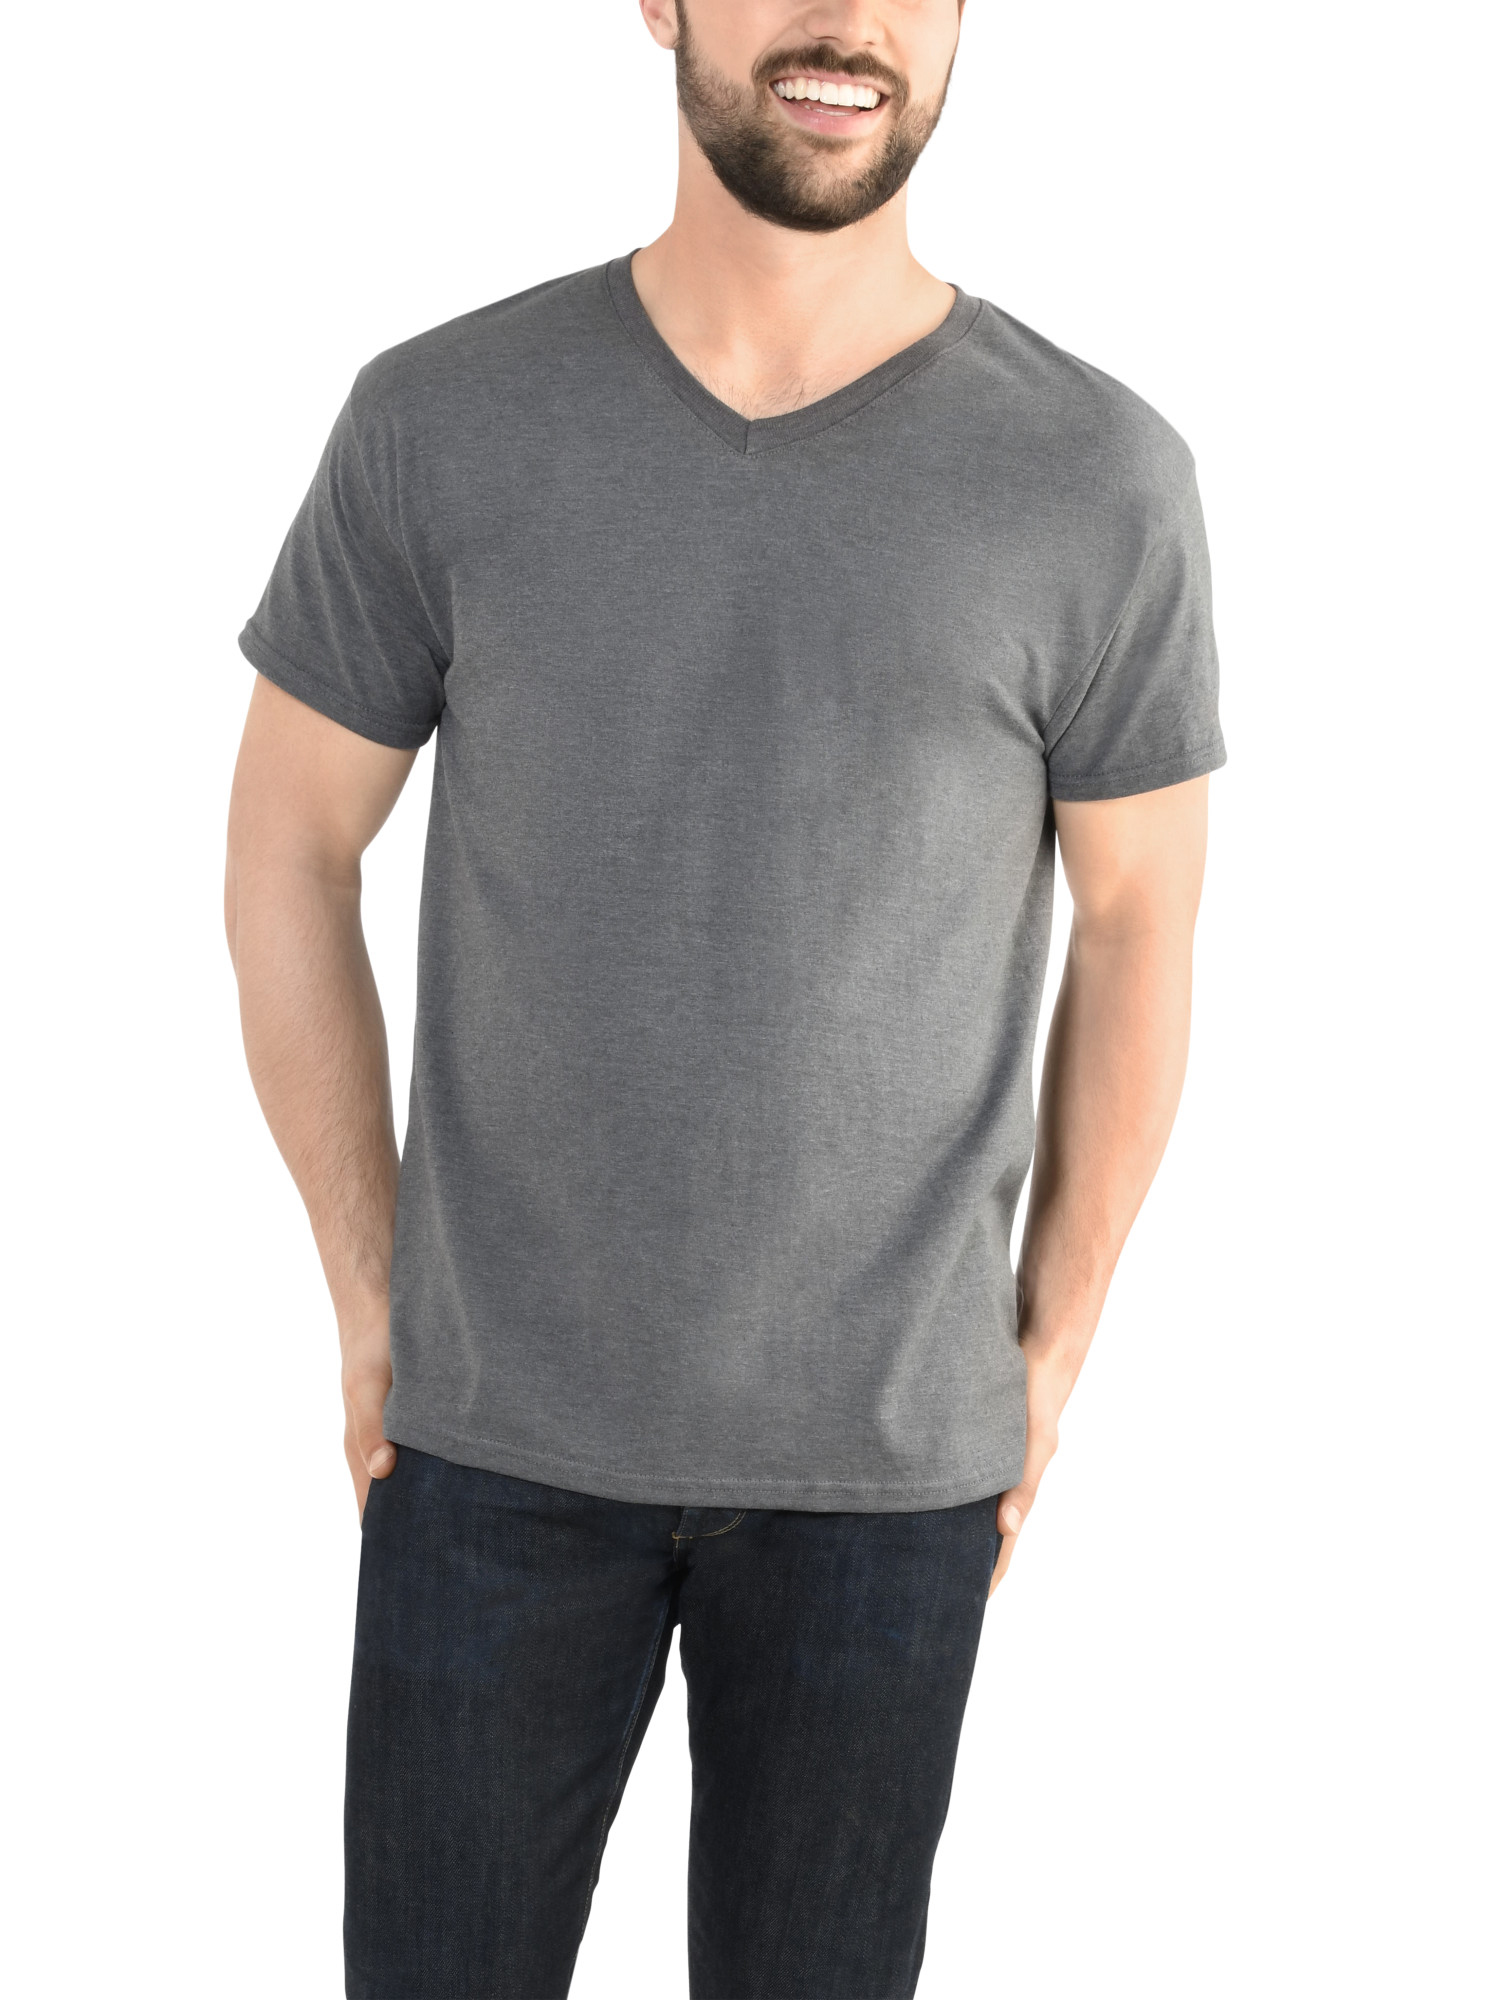 Fruit of the Loom Men's Platinum Eversoft Short Sleeve V Neck T Shirt, up to Size 4XL - image 1 of 6